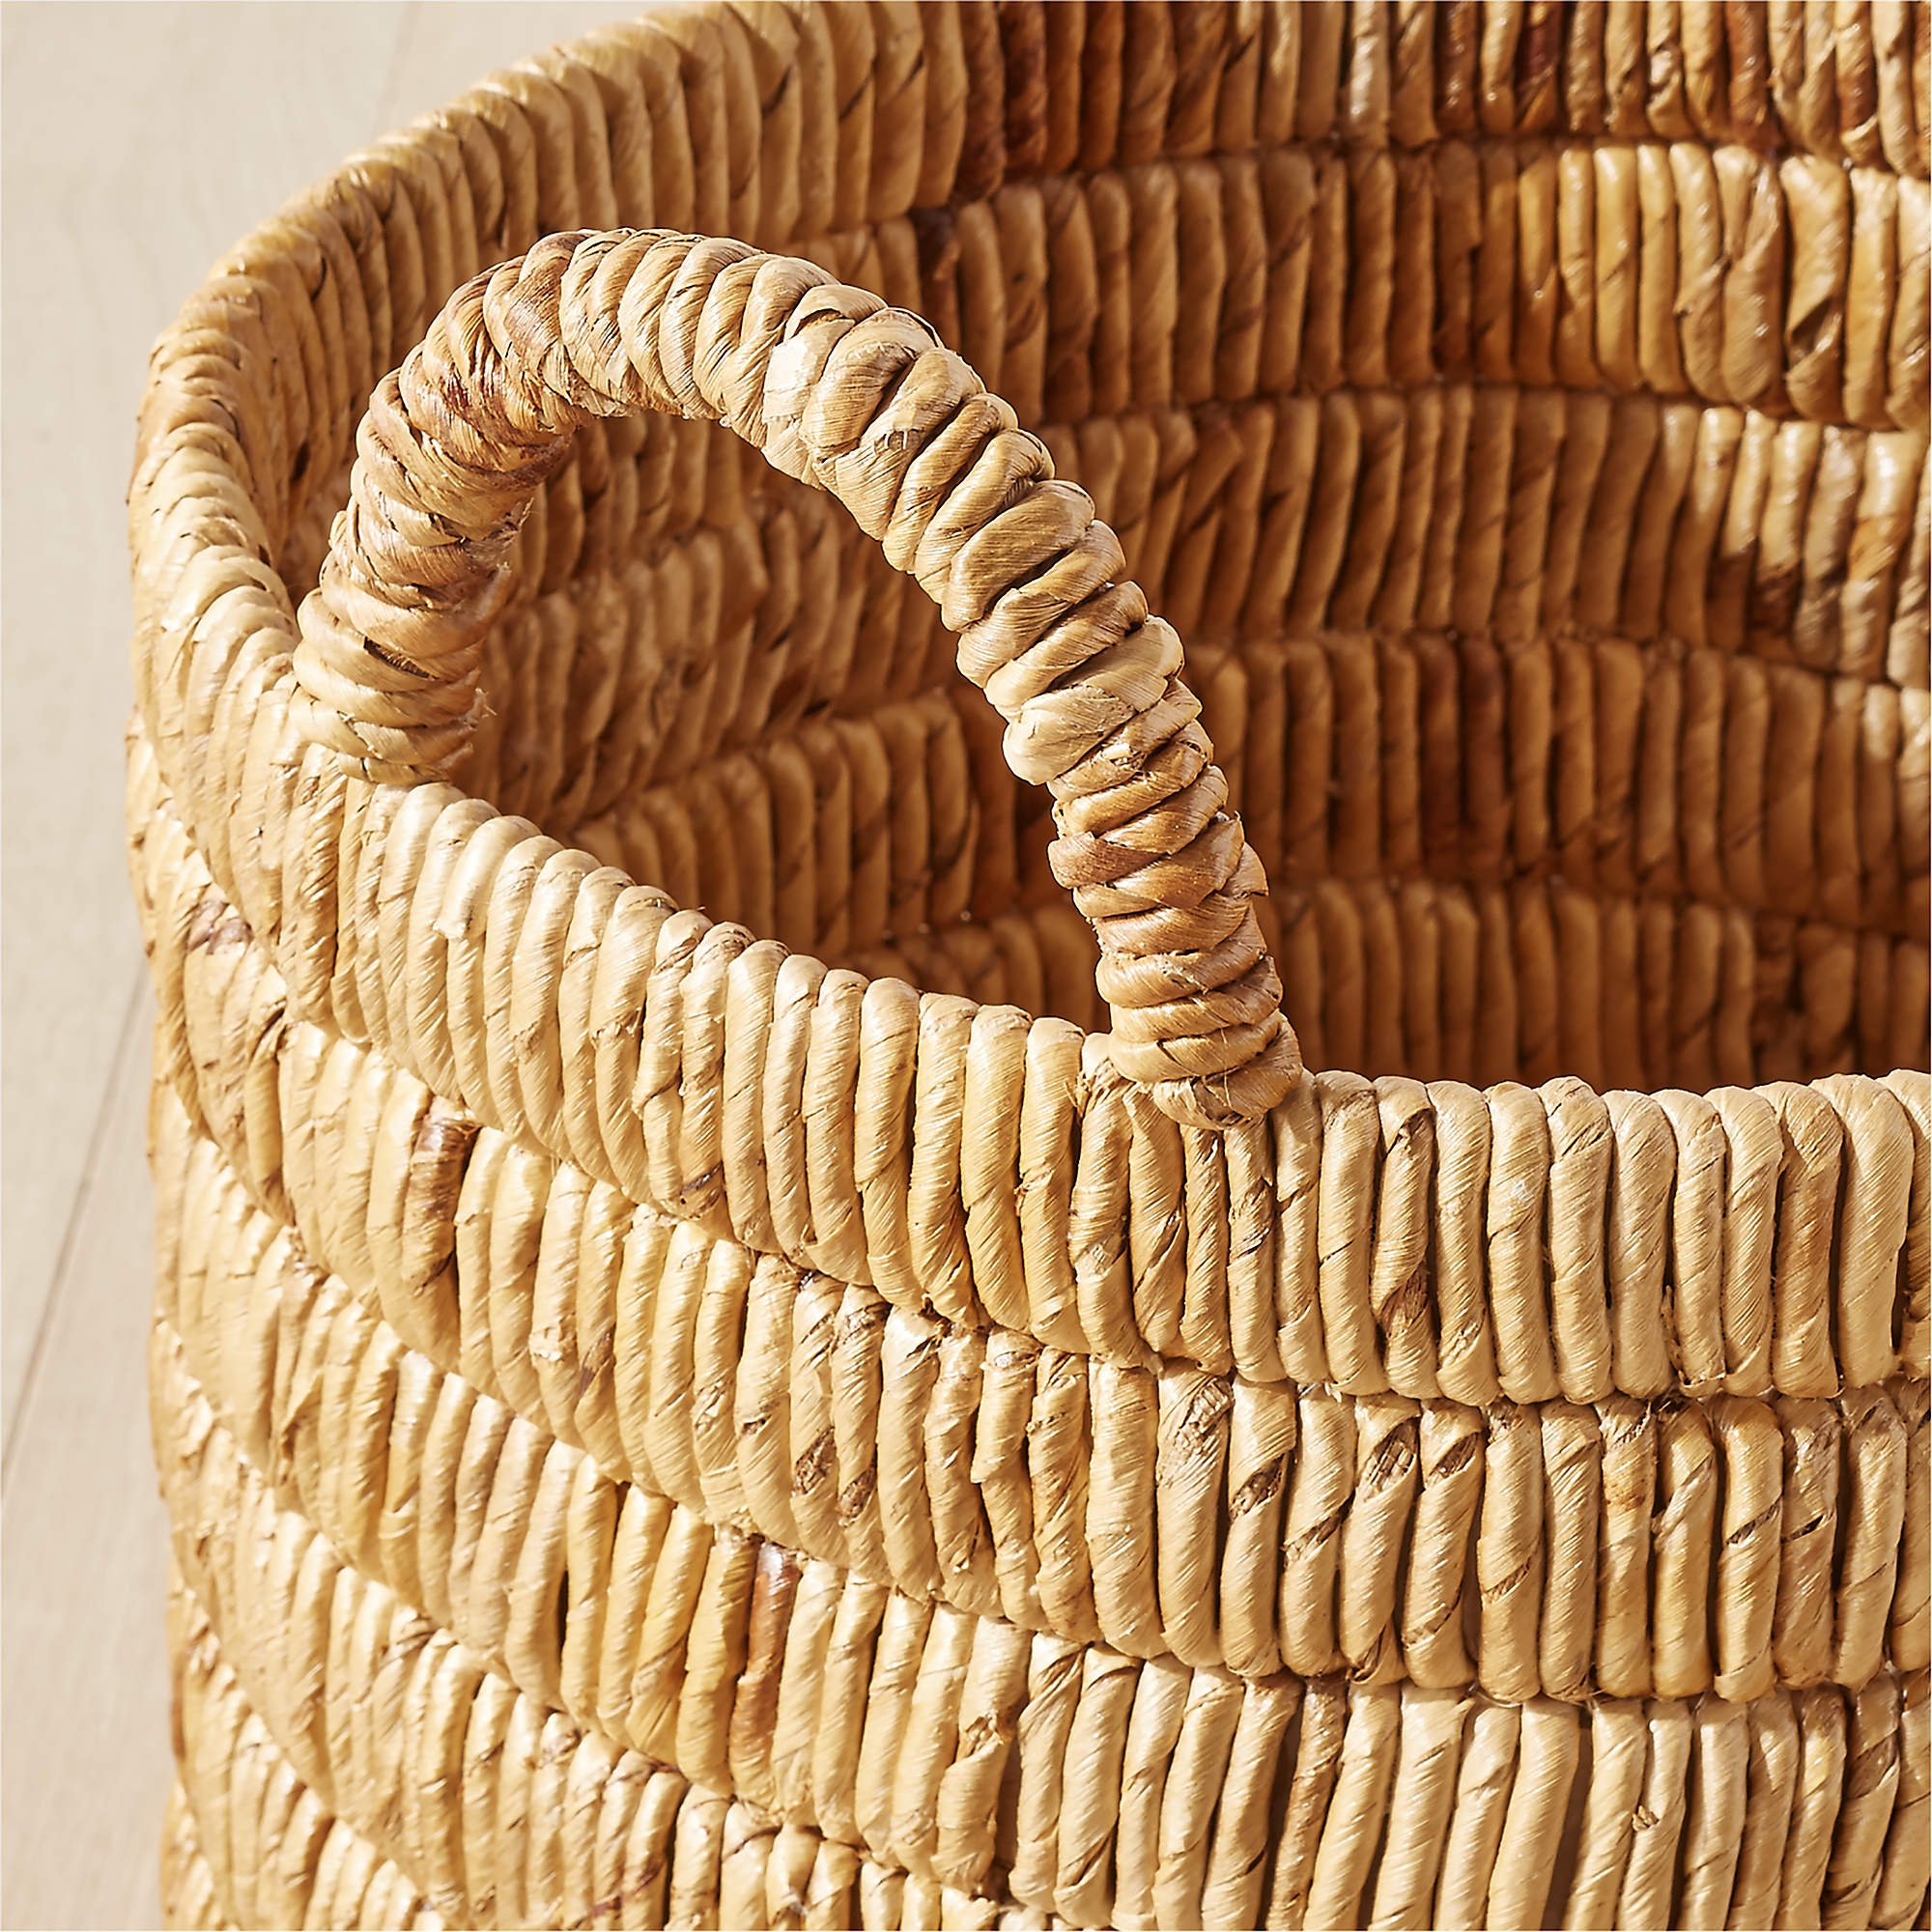 Milos Handwoven Storage Basket Large - Image 2